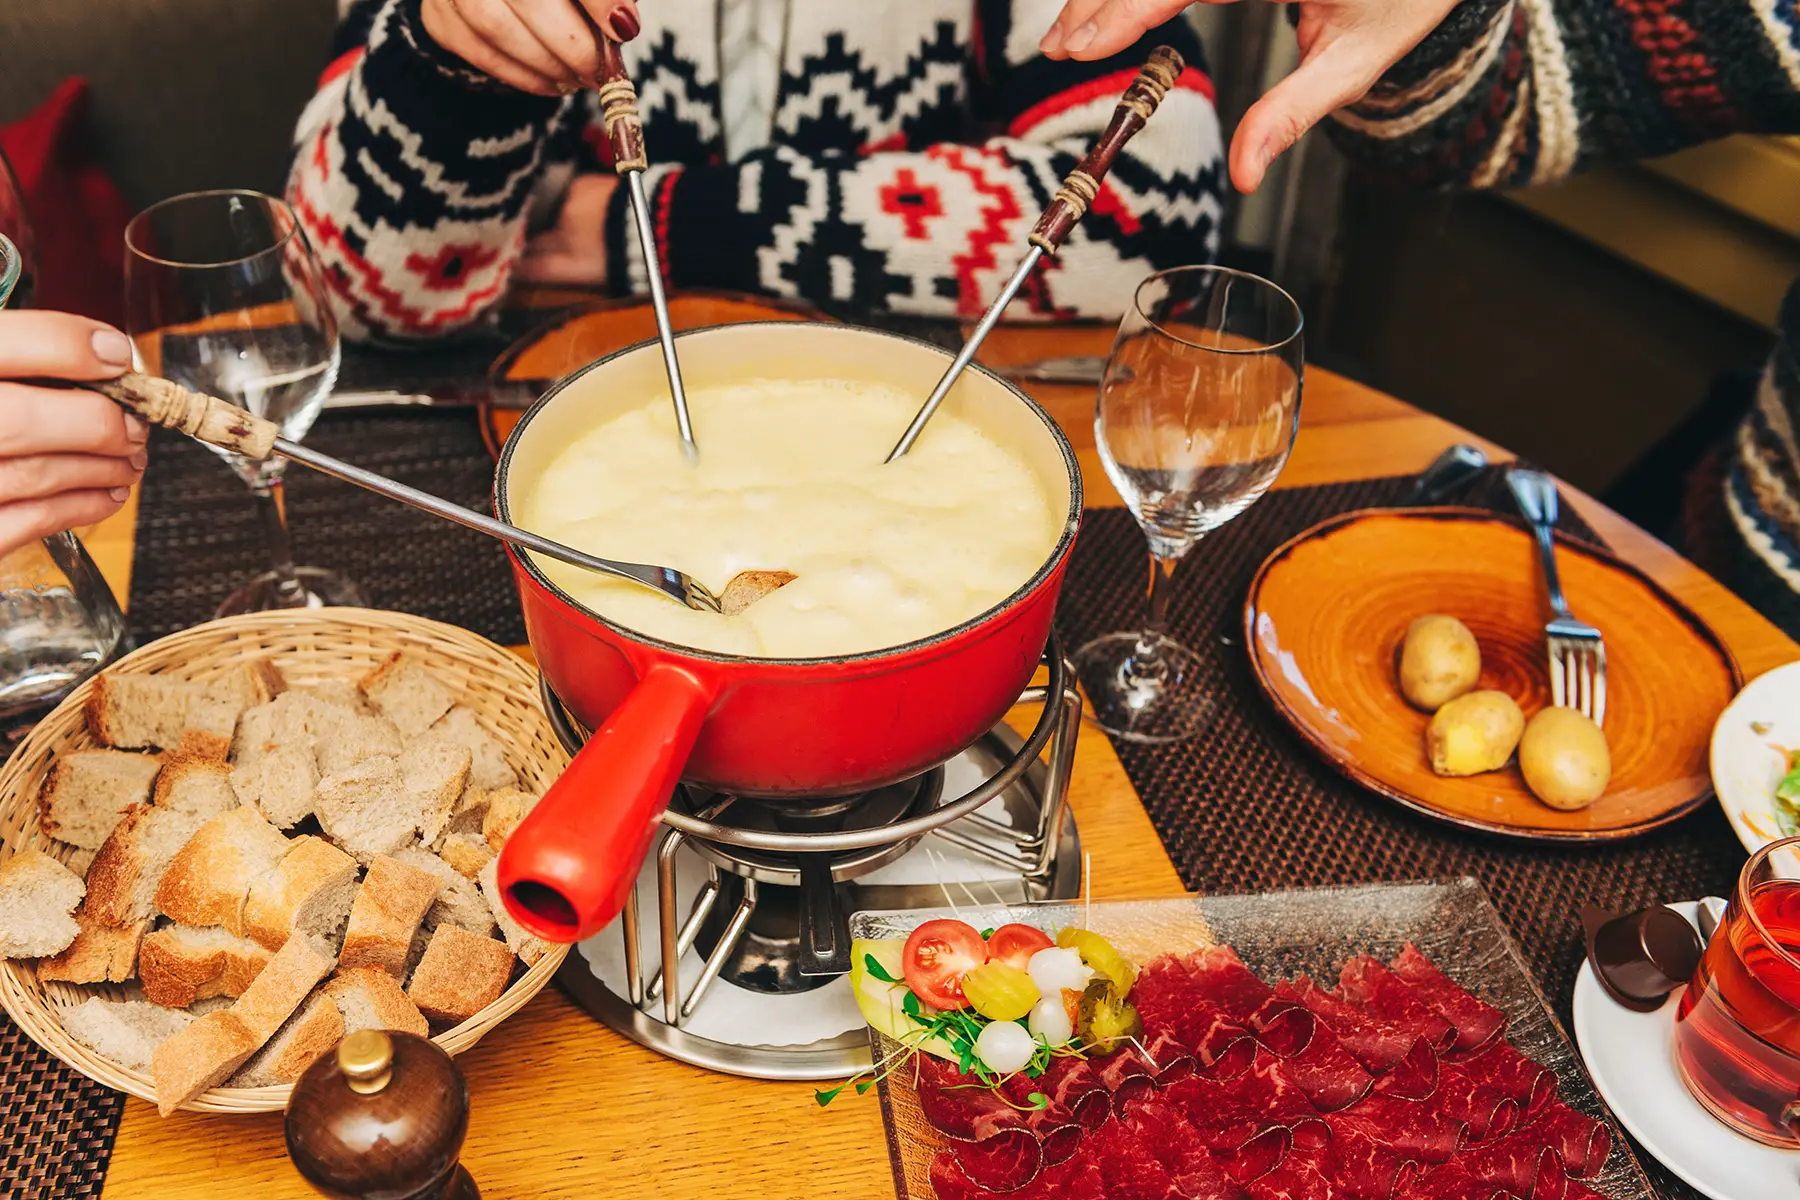 Cheese fondue table setting